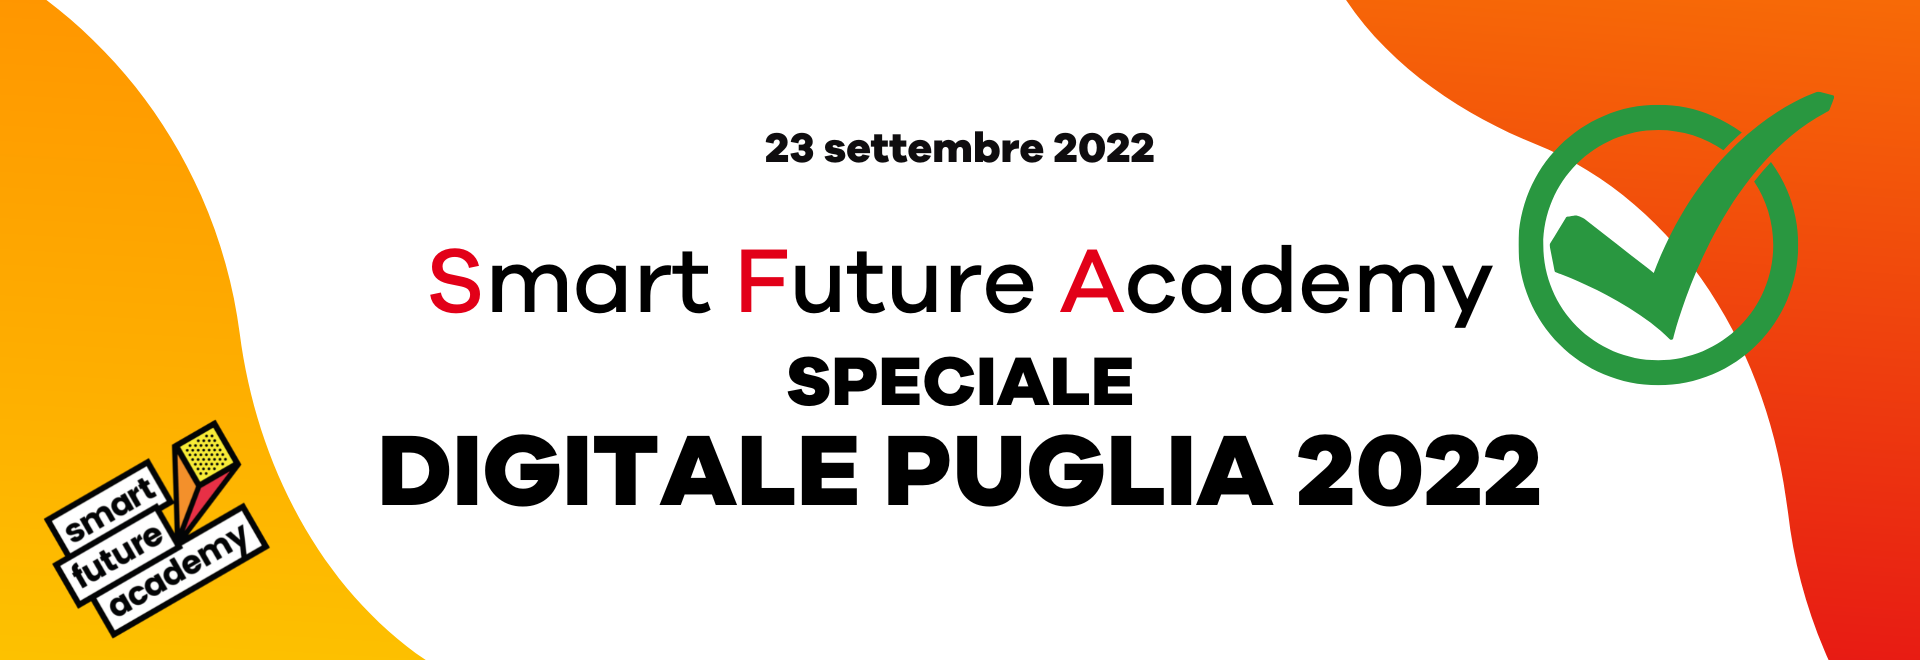 Speciale Digitale Puglia 2022 Online